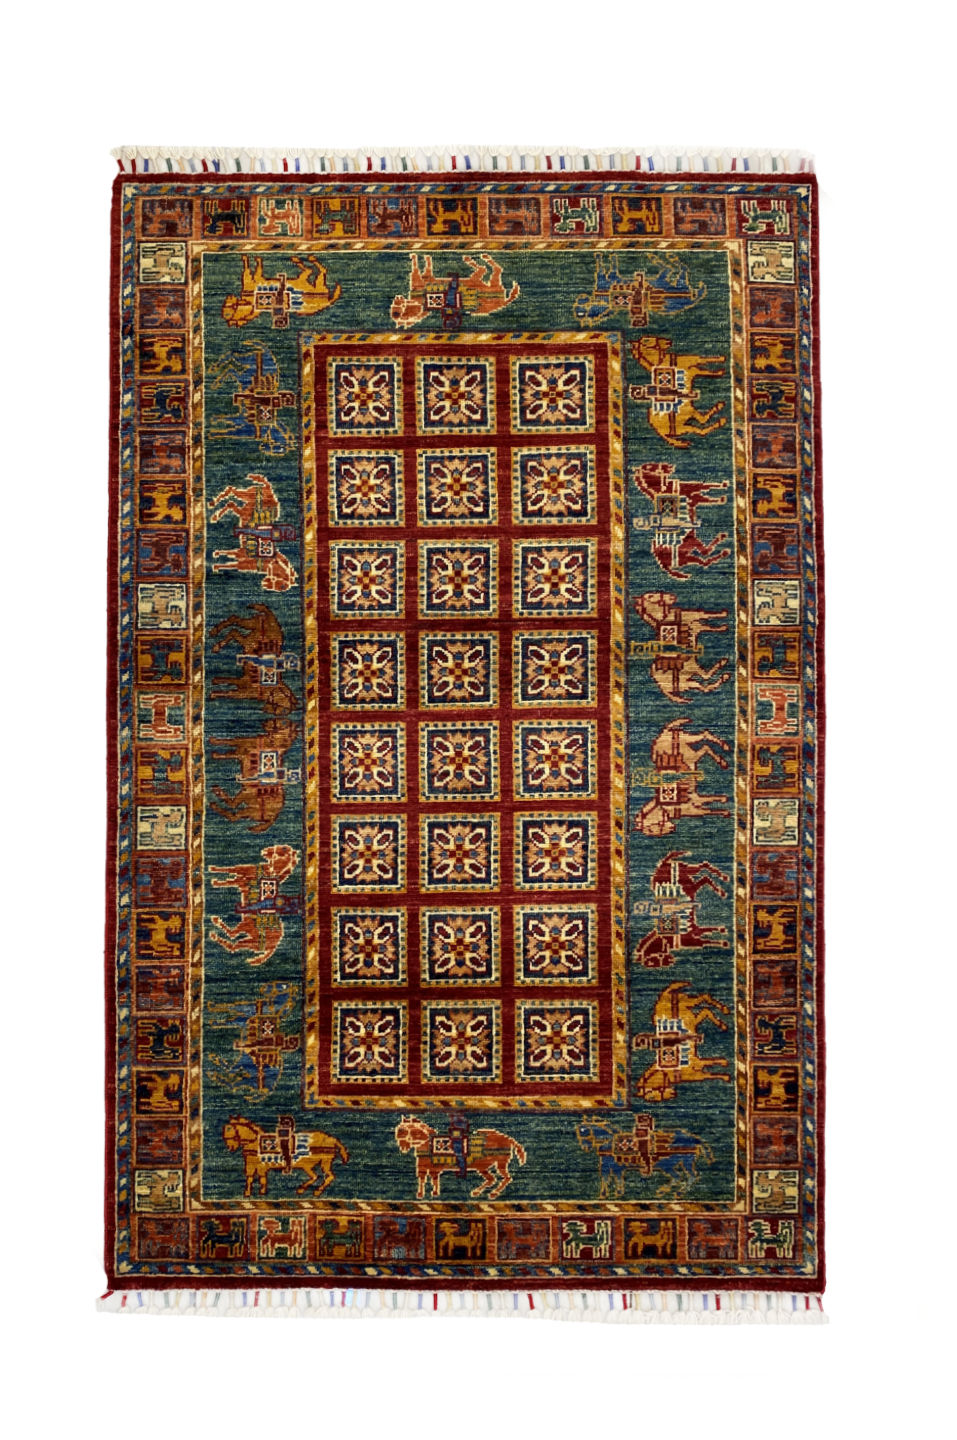 Şirvan Bicolor Carpet 156 x 100 cm